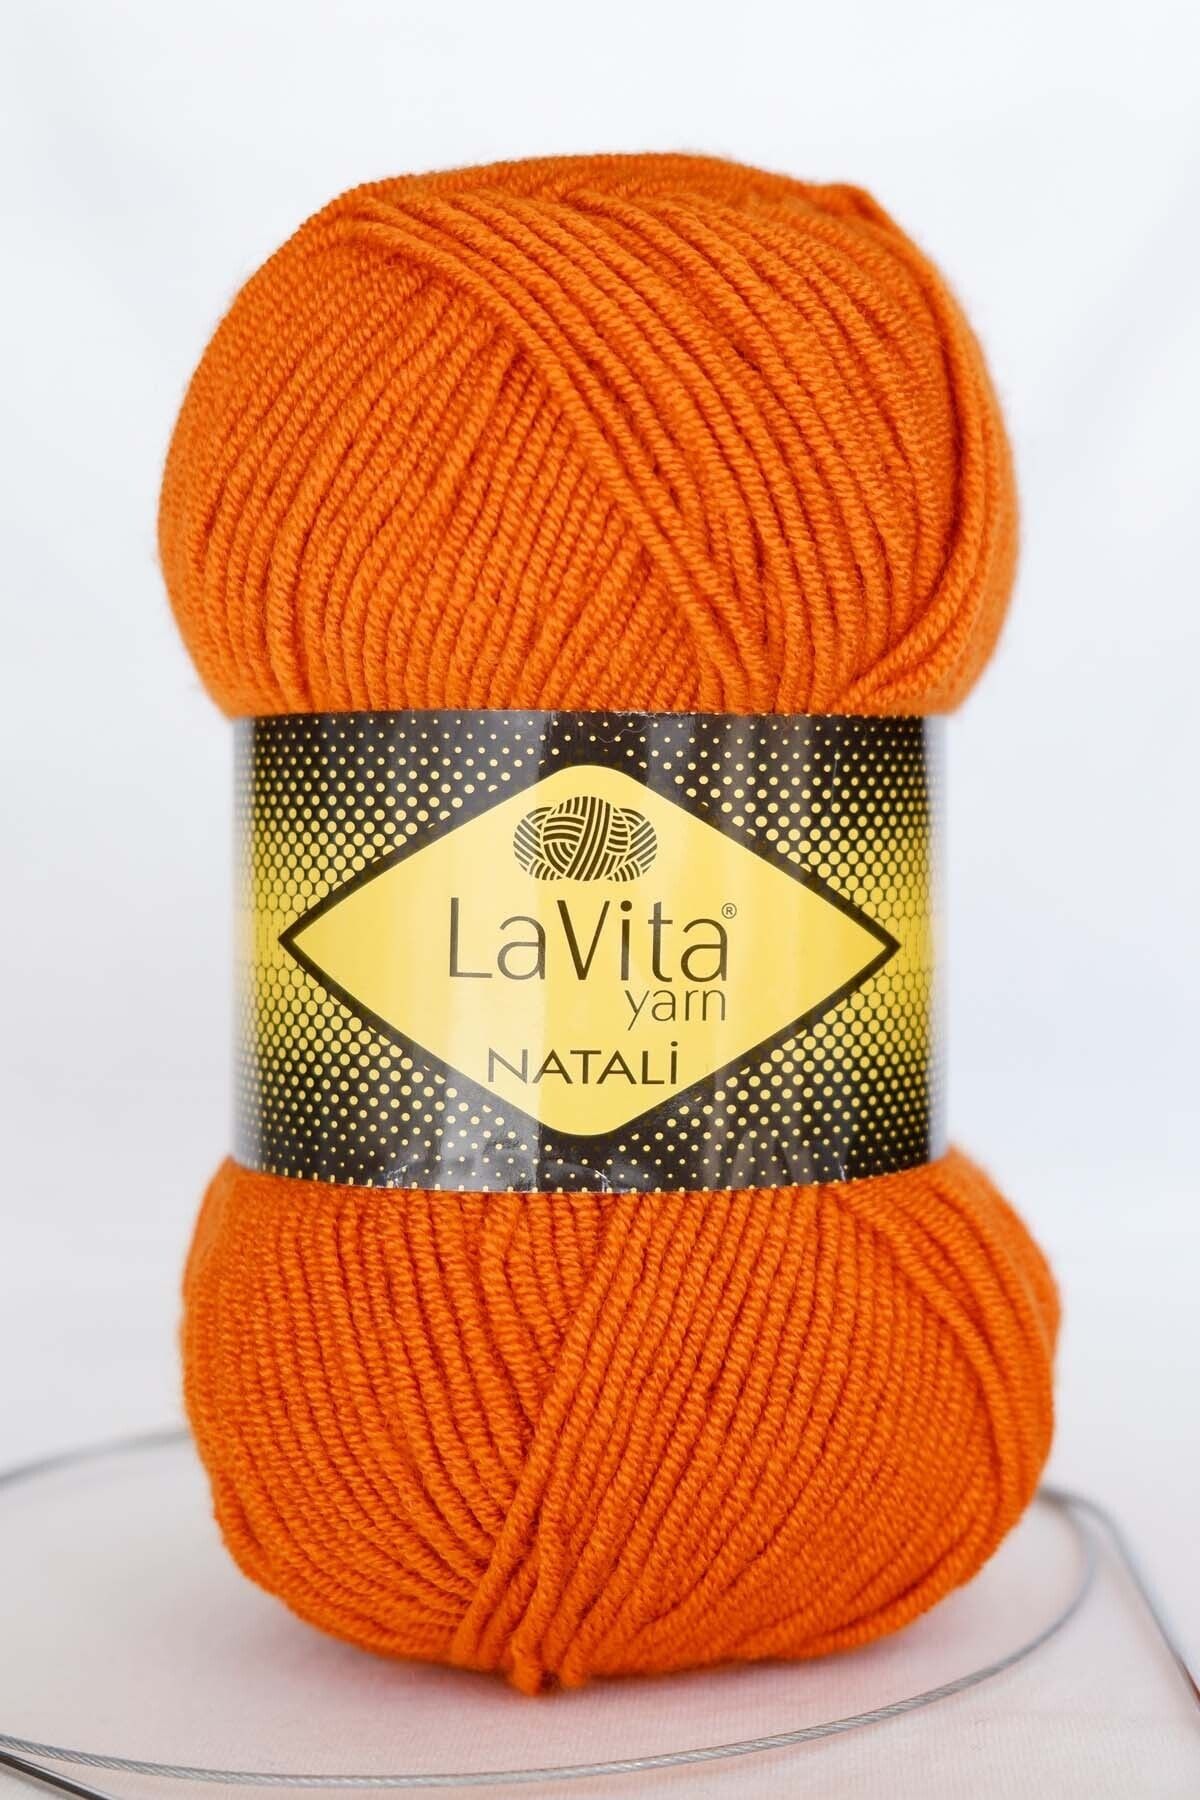 LaVita Yarn Natali El Örgü Ipi Taka Yarn (9554-turuncu)